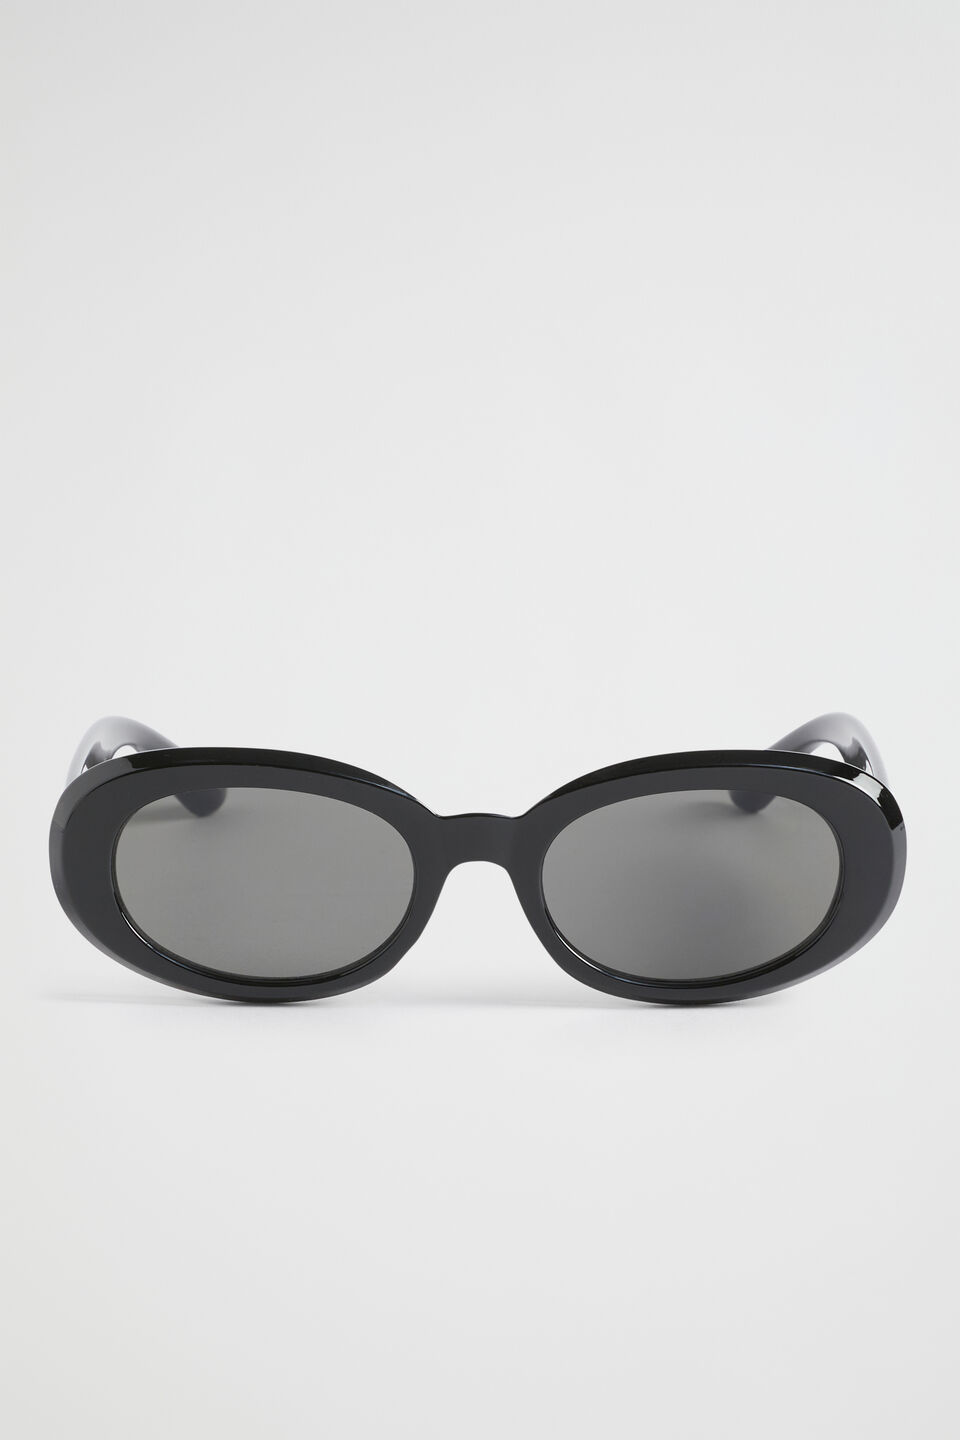 Goldie Oval Sunglasses  Black